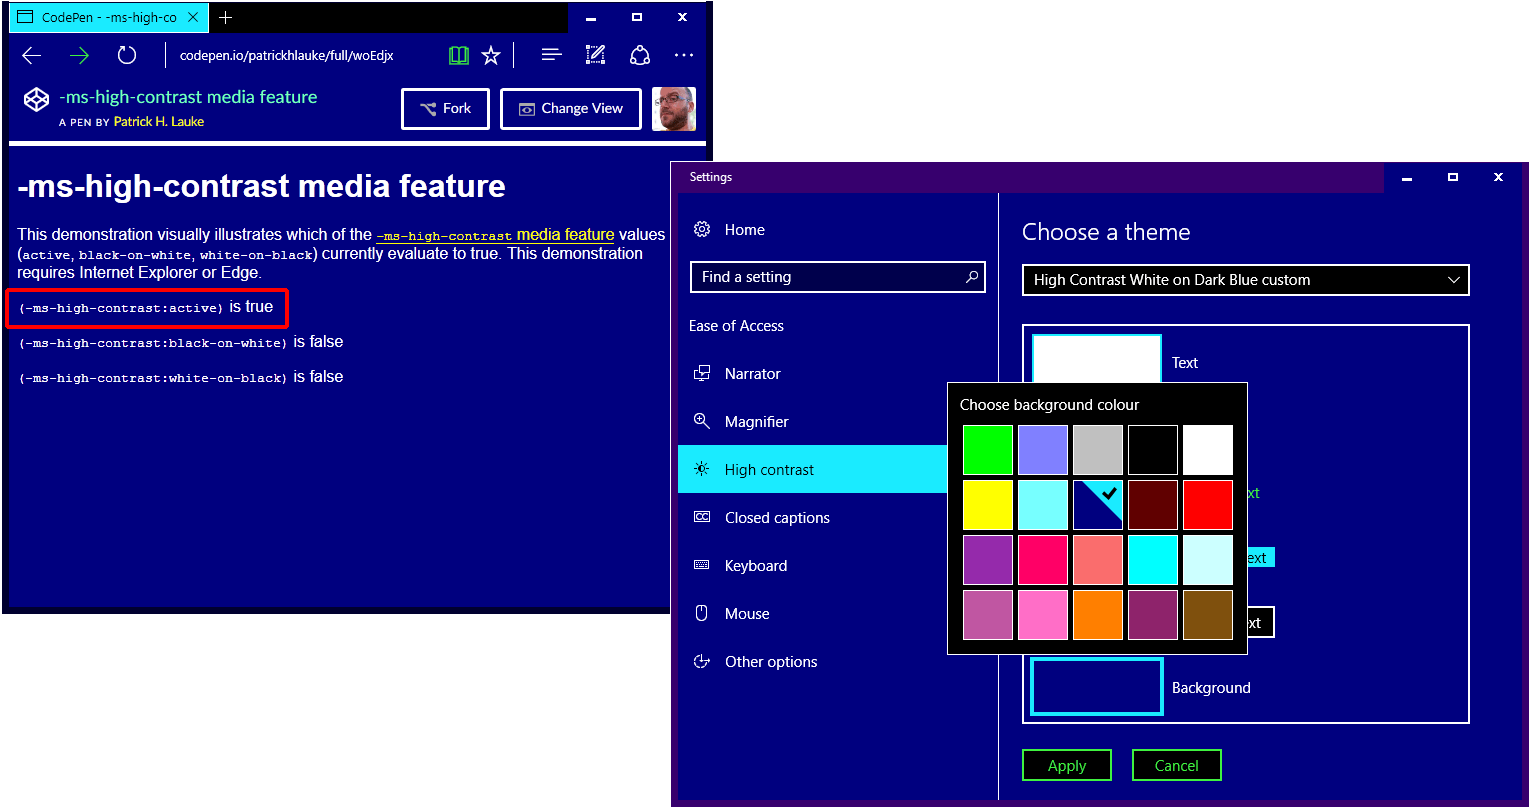 Screenshot of media feature test in Edge in a custom high contrast mode